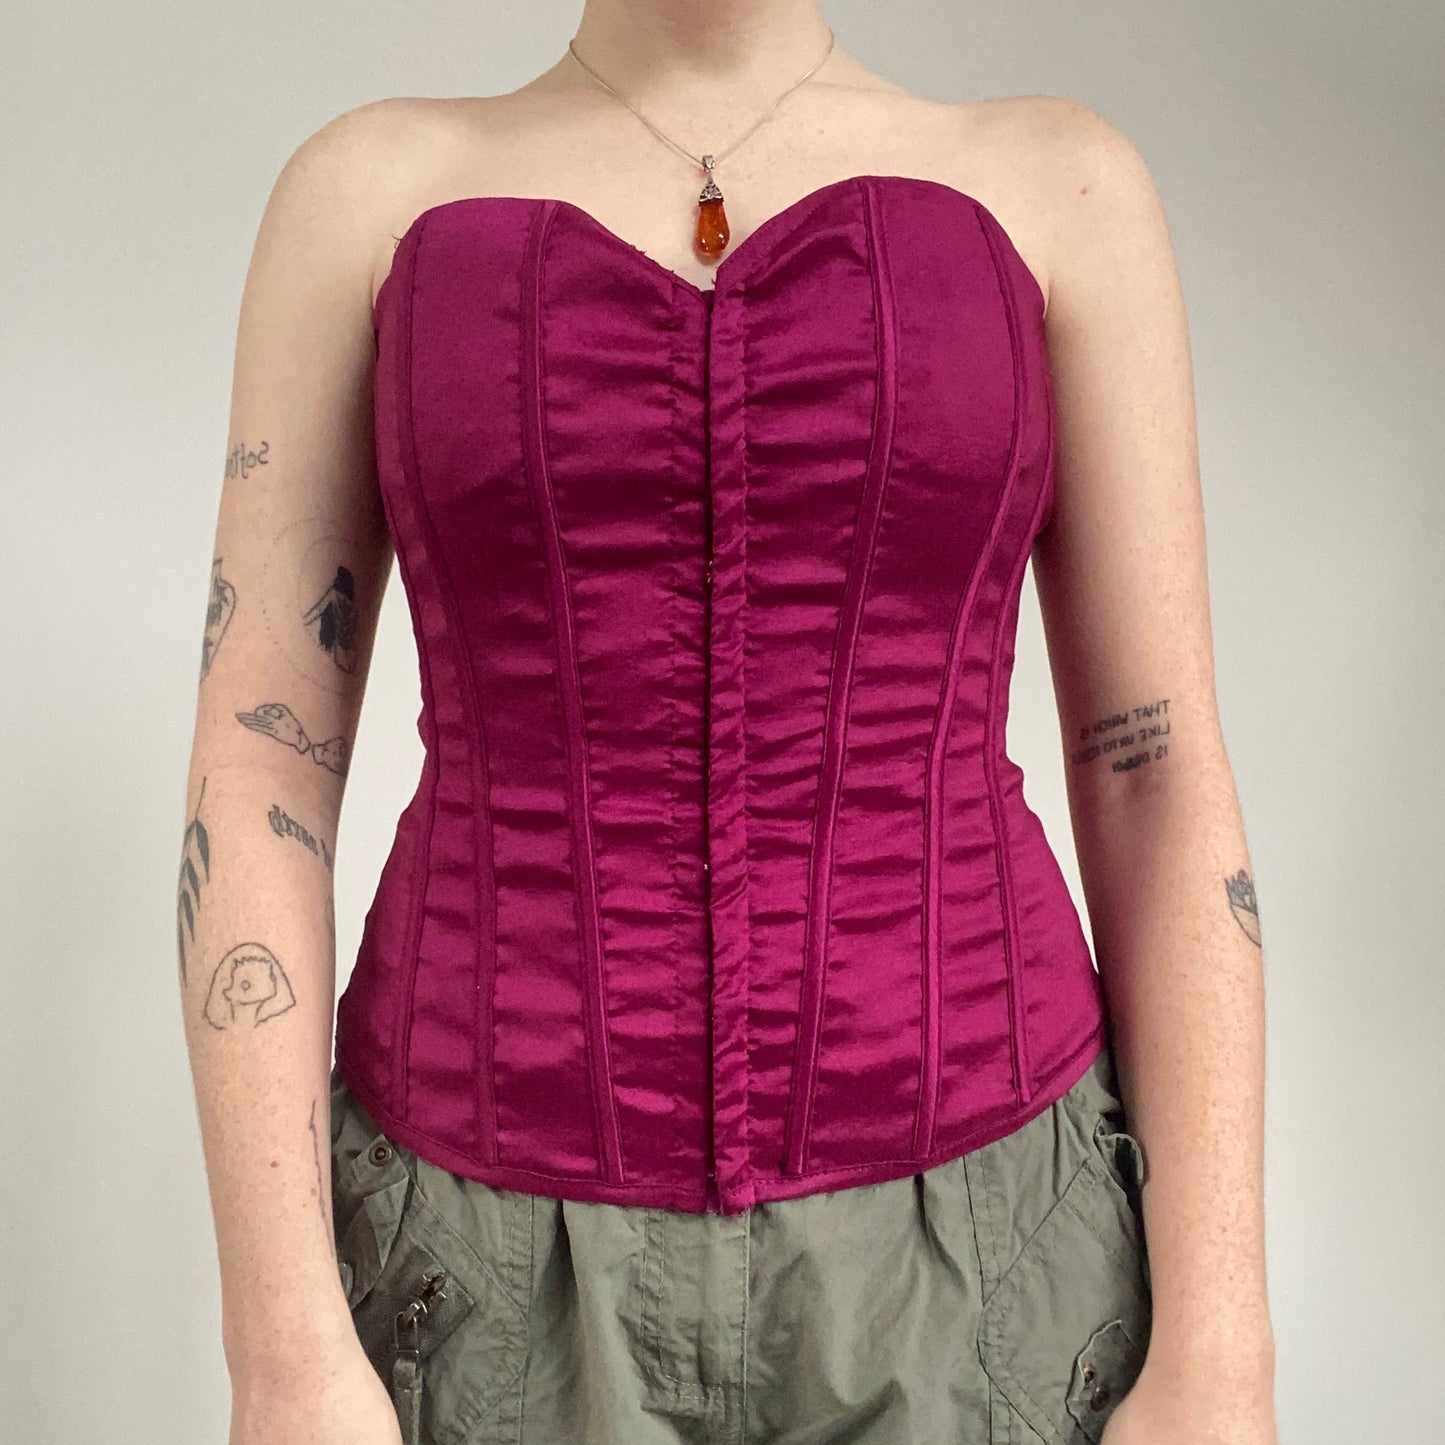 Pink corset - size 10/12